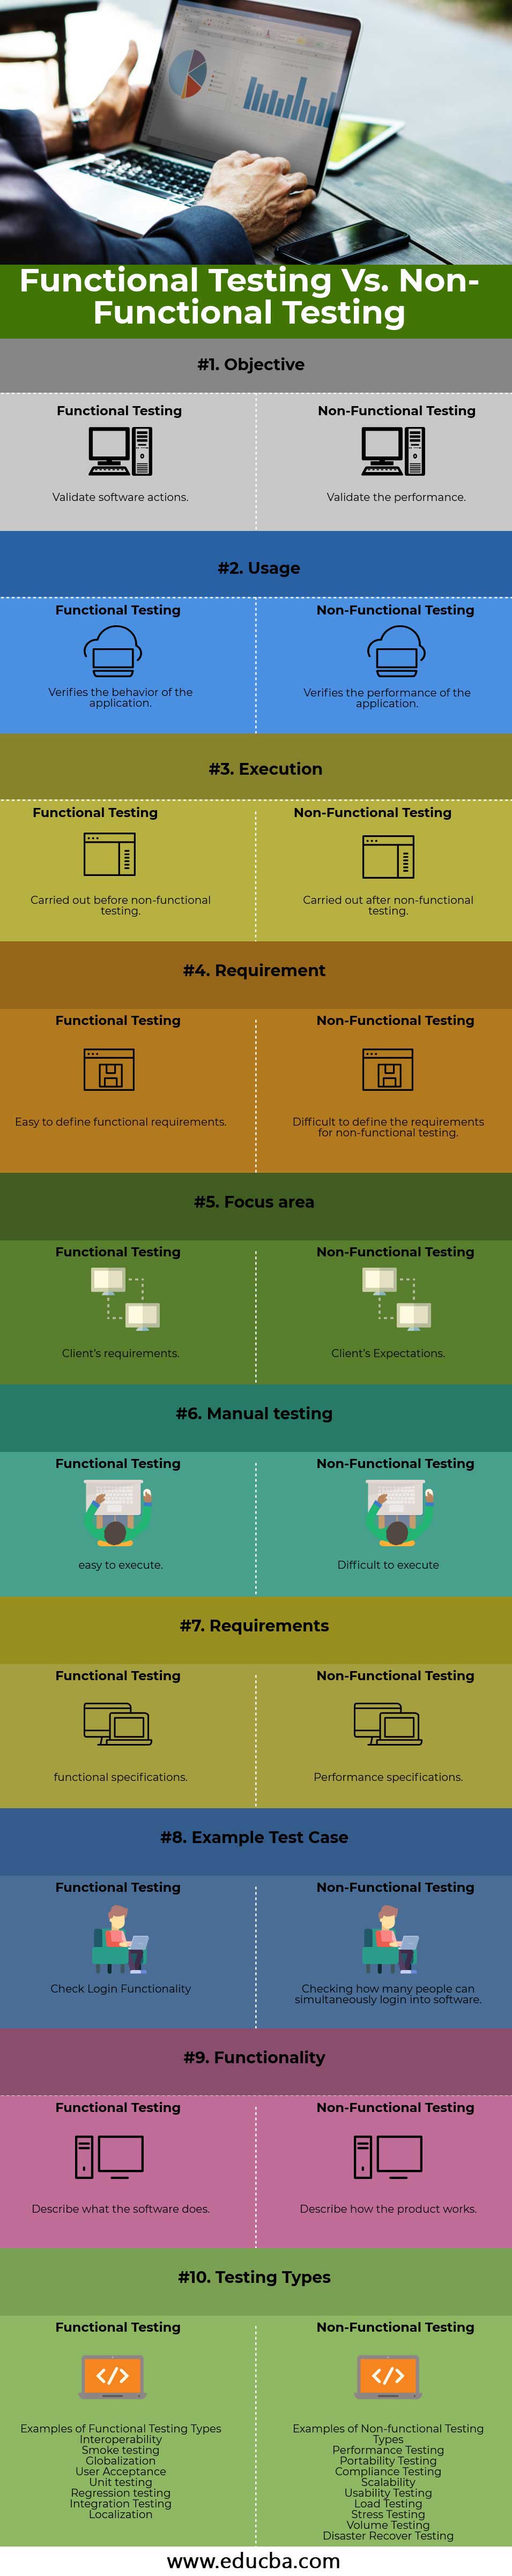 Functional-Testing-vs-Non-Functional-Testing-info